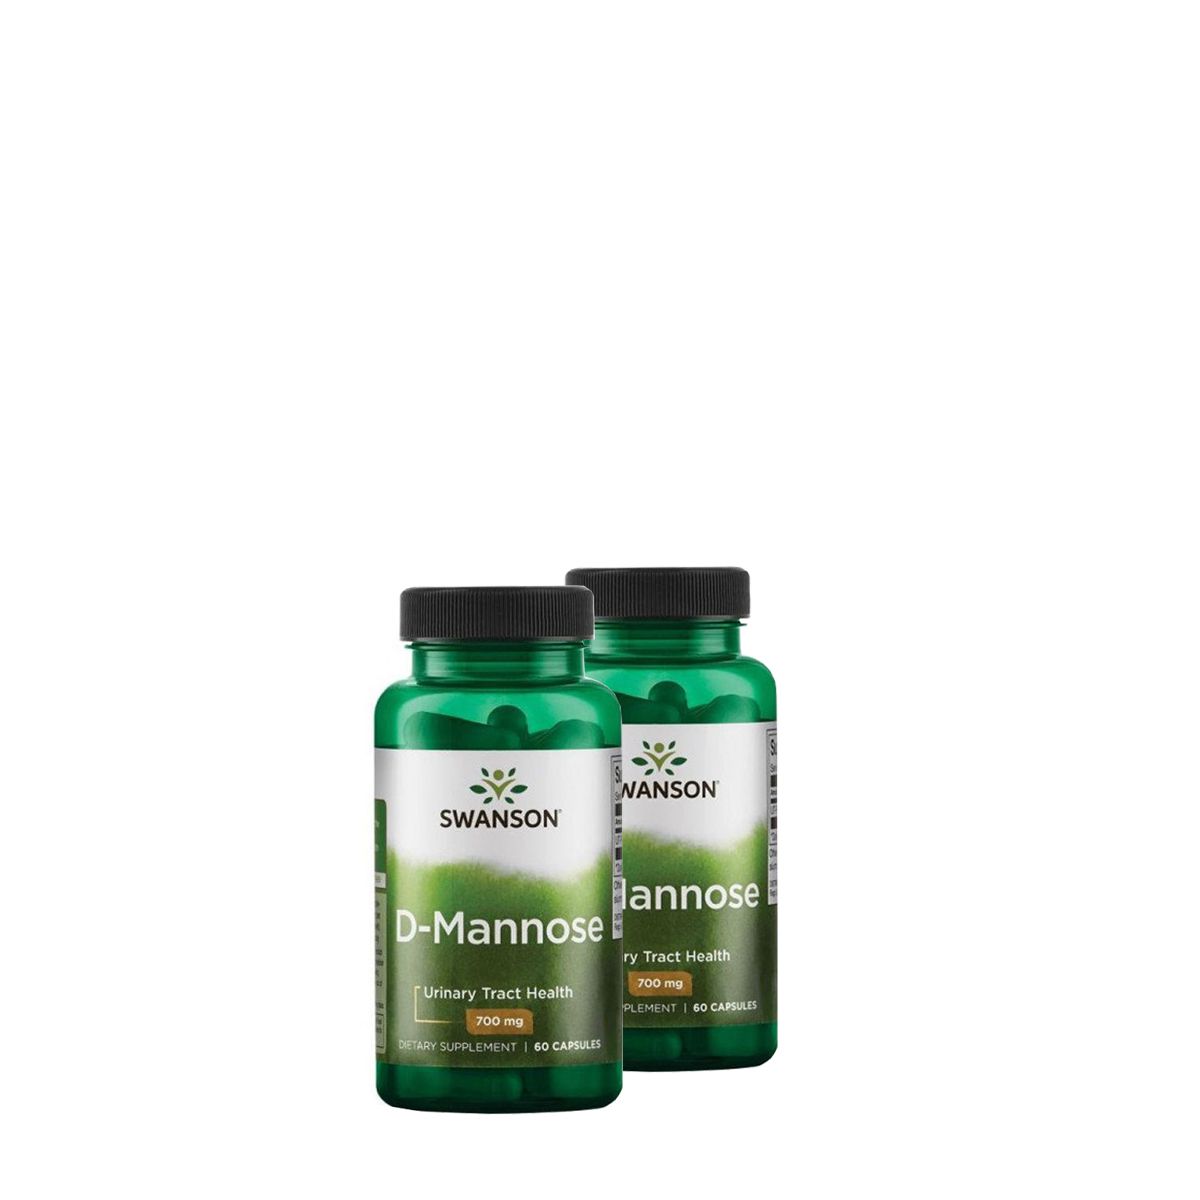 D-mannóz 700 mg, Swanson D-Mannose, 2x60 kapszula